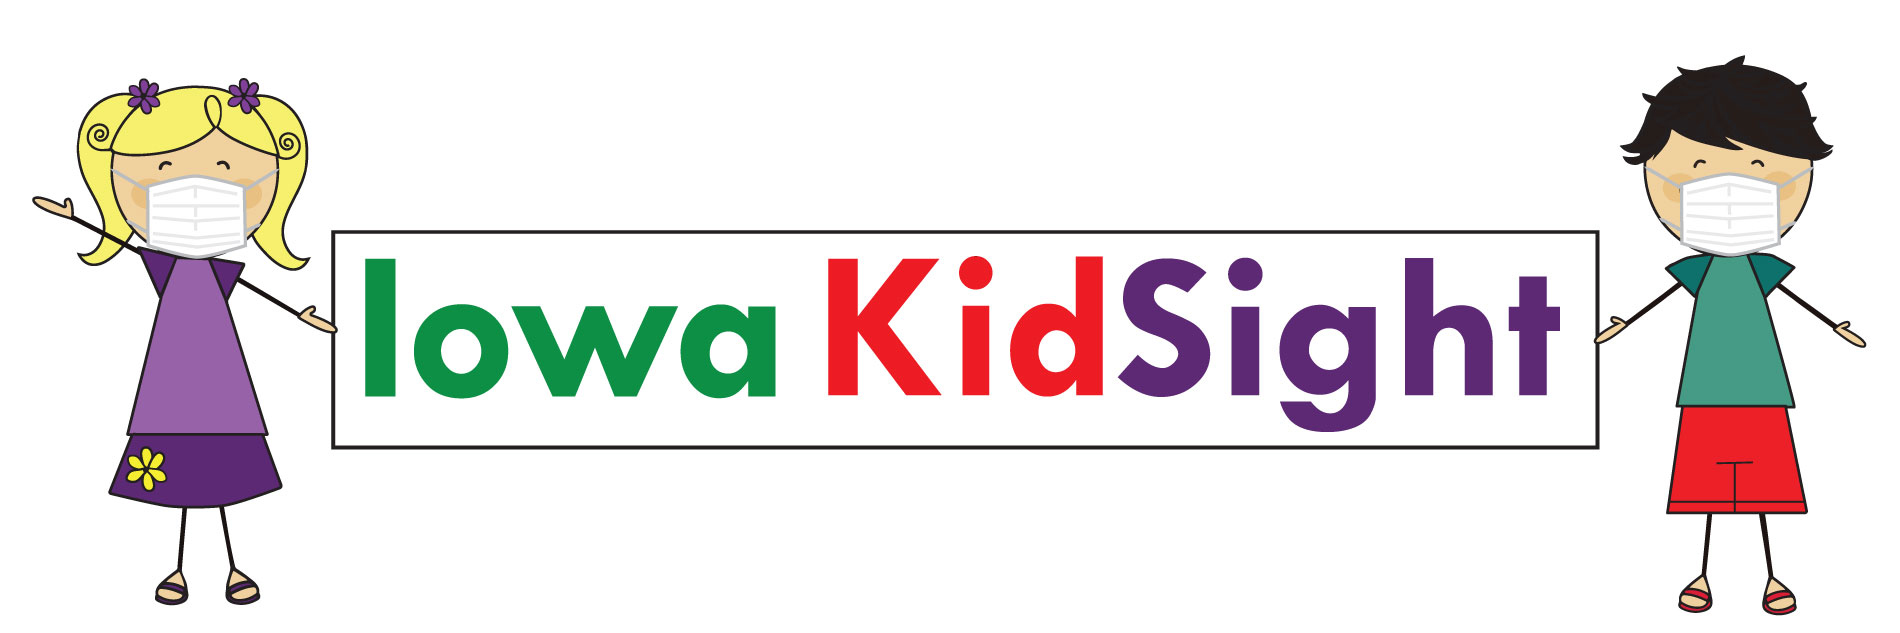 Iowa KidSight Program